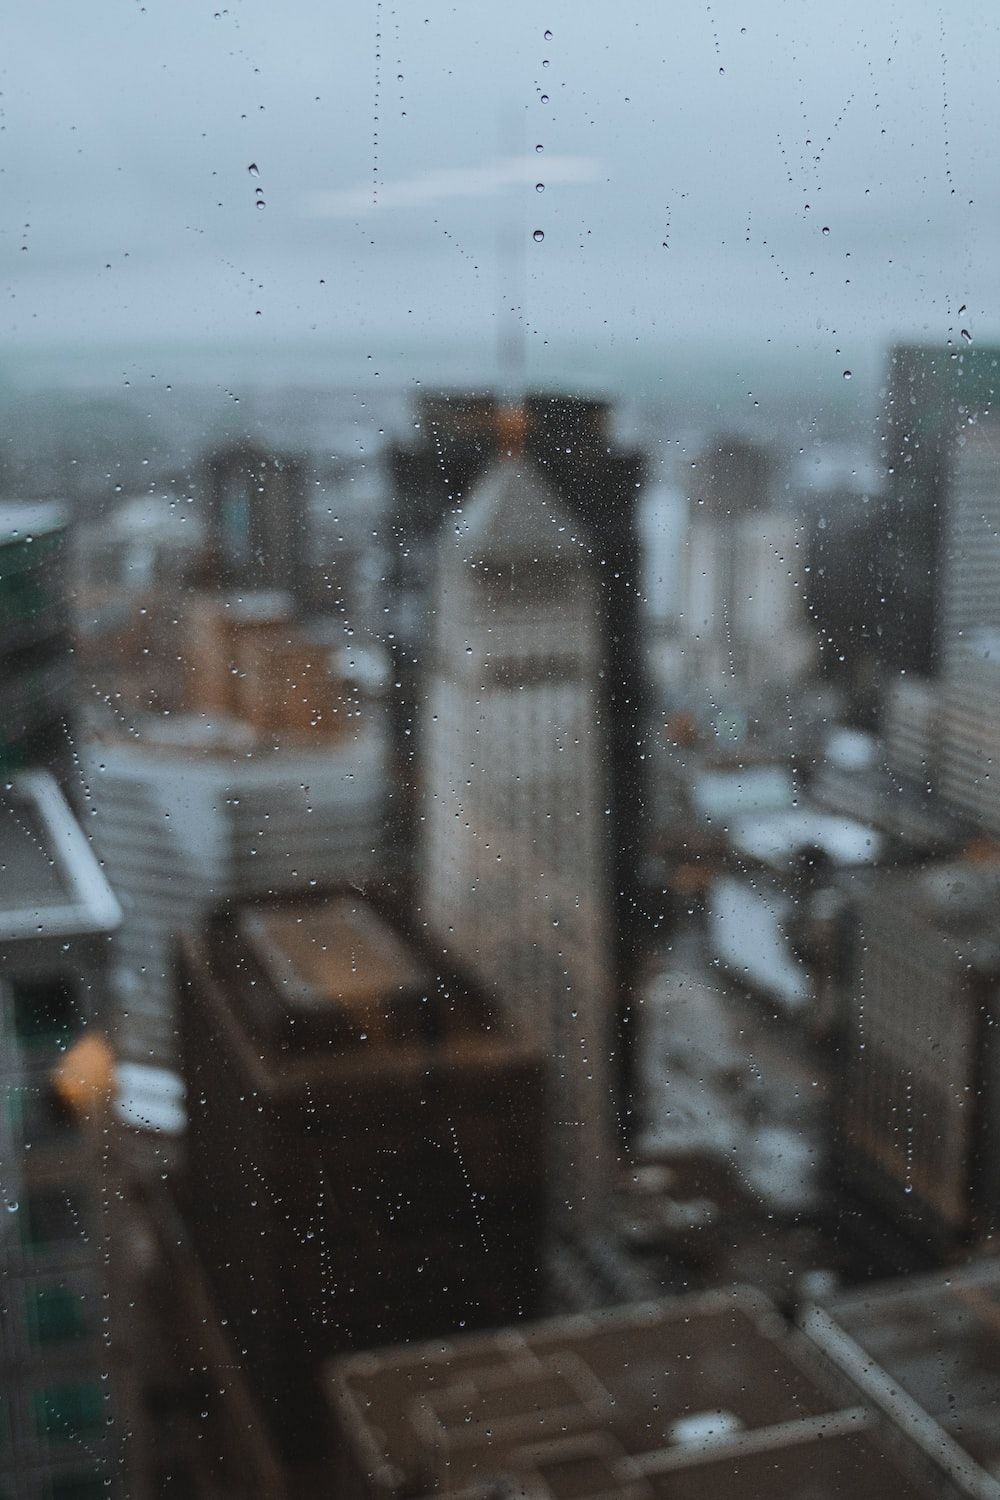 A cityscape is seen through a rain-streaked window. - Rain